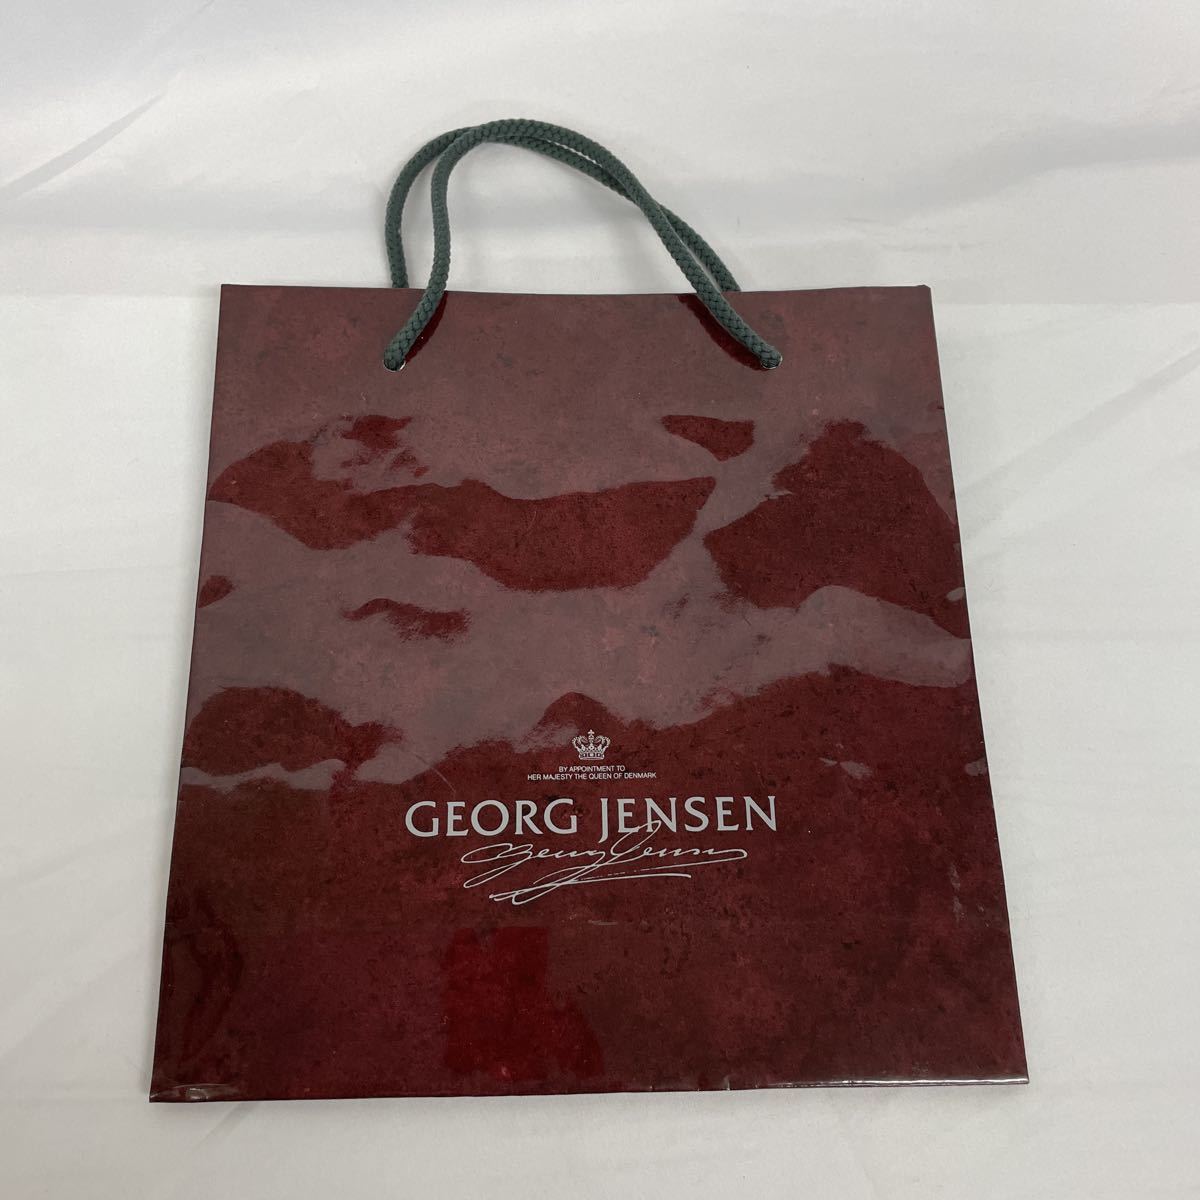  George Jensen магазин пакет бумажный пакет 